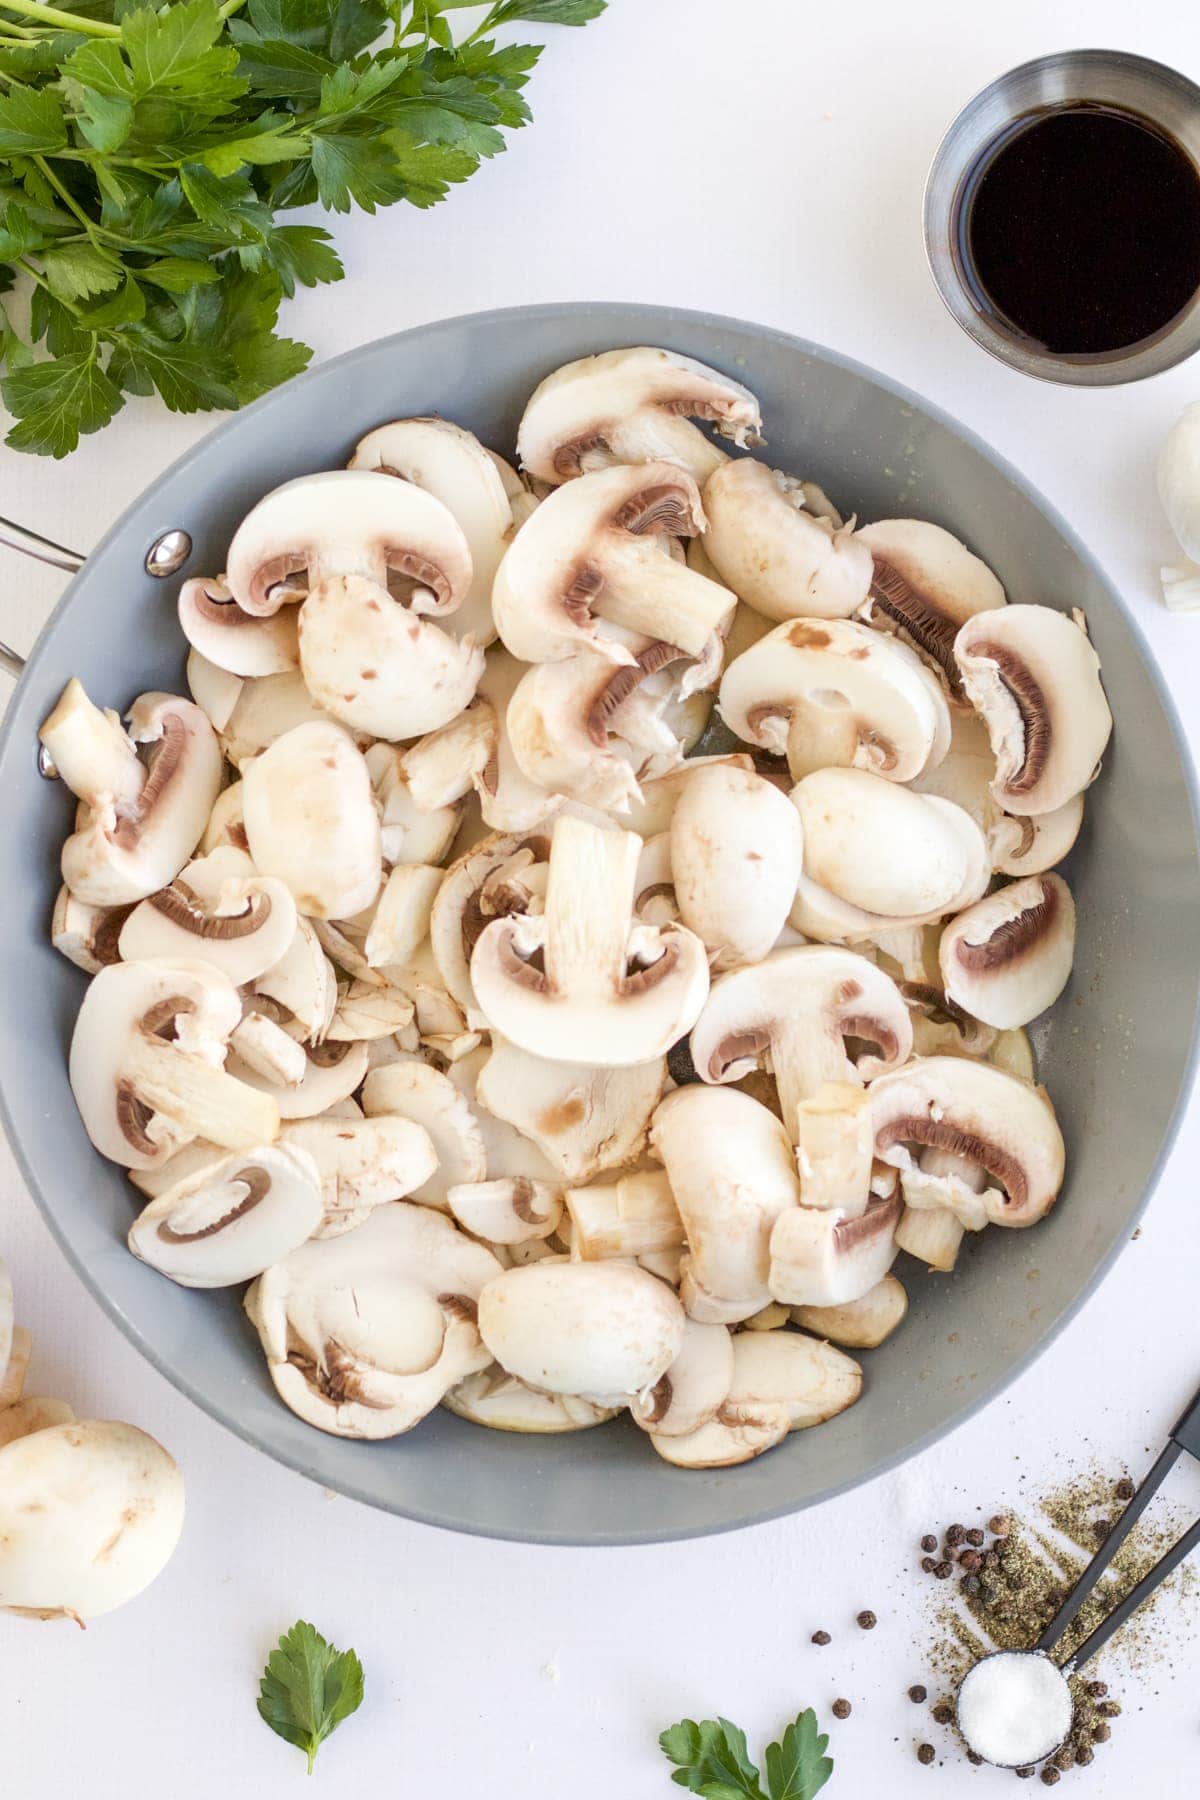 Raw mushrooms in pan in preparation to make sauteed mushrooms